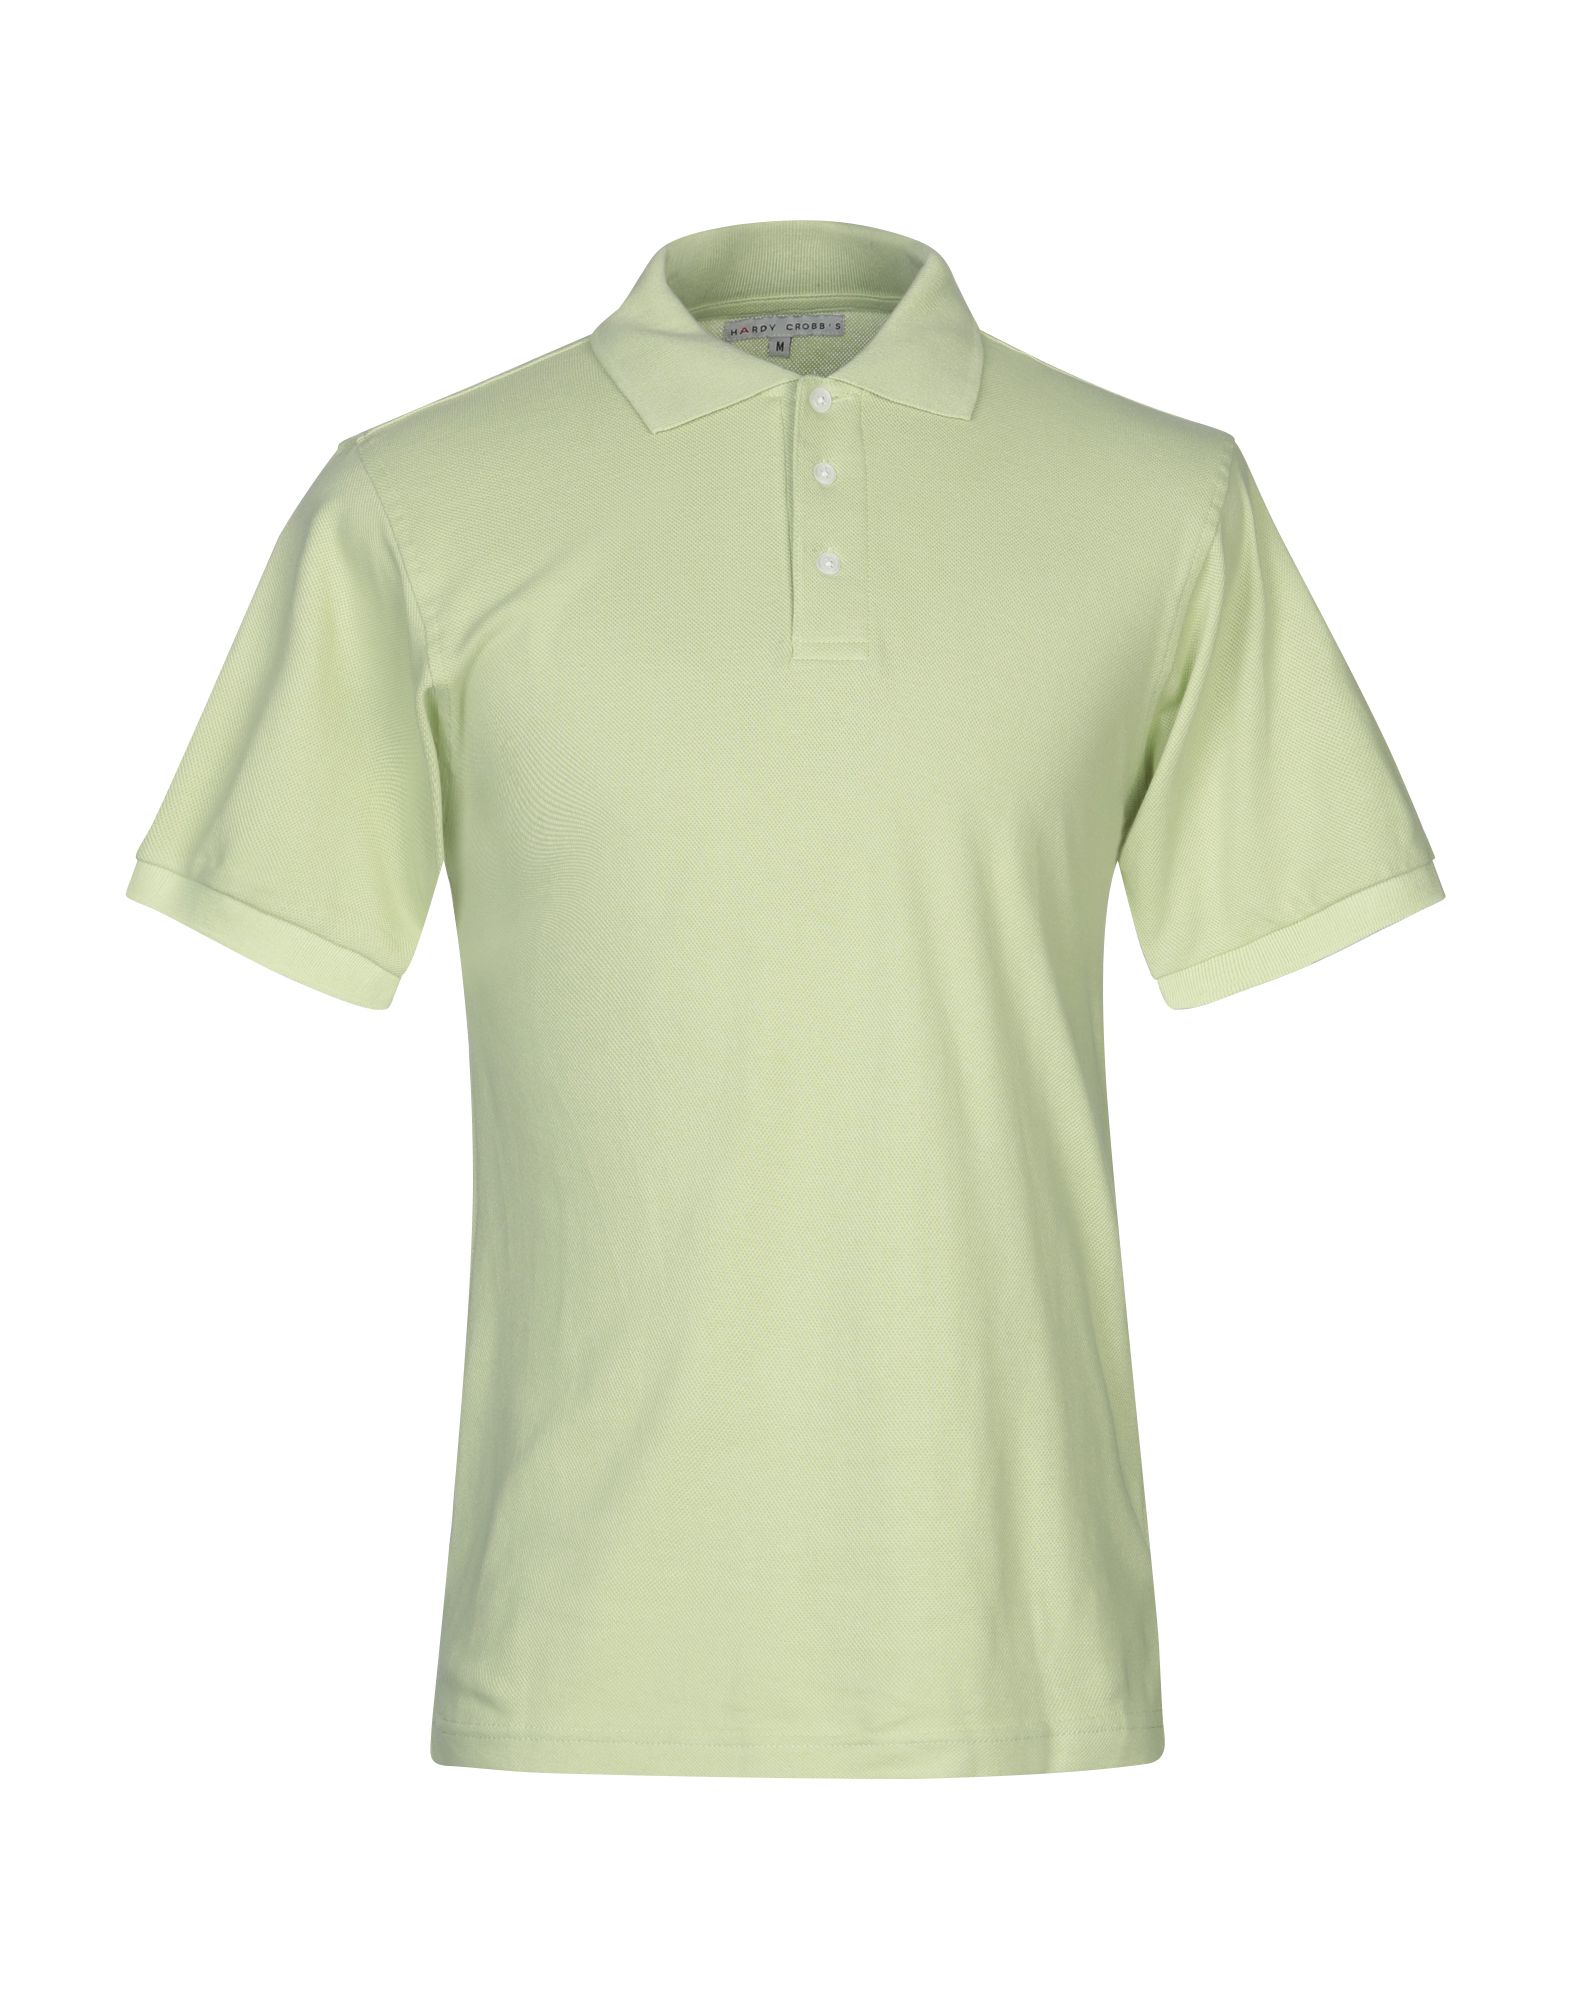 Hardy Crobb's Man Polo Shirt Light Green Size Xl Cotton